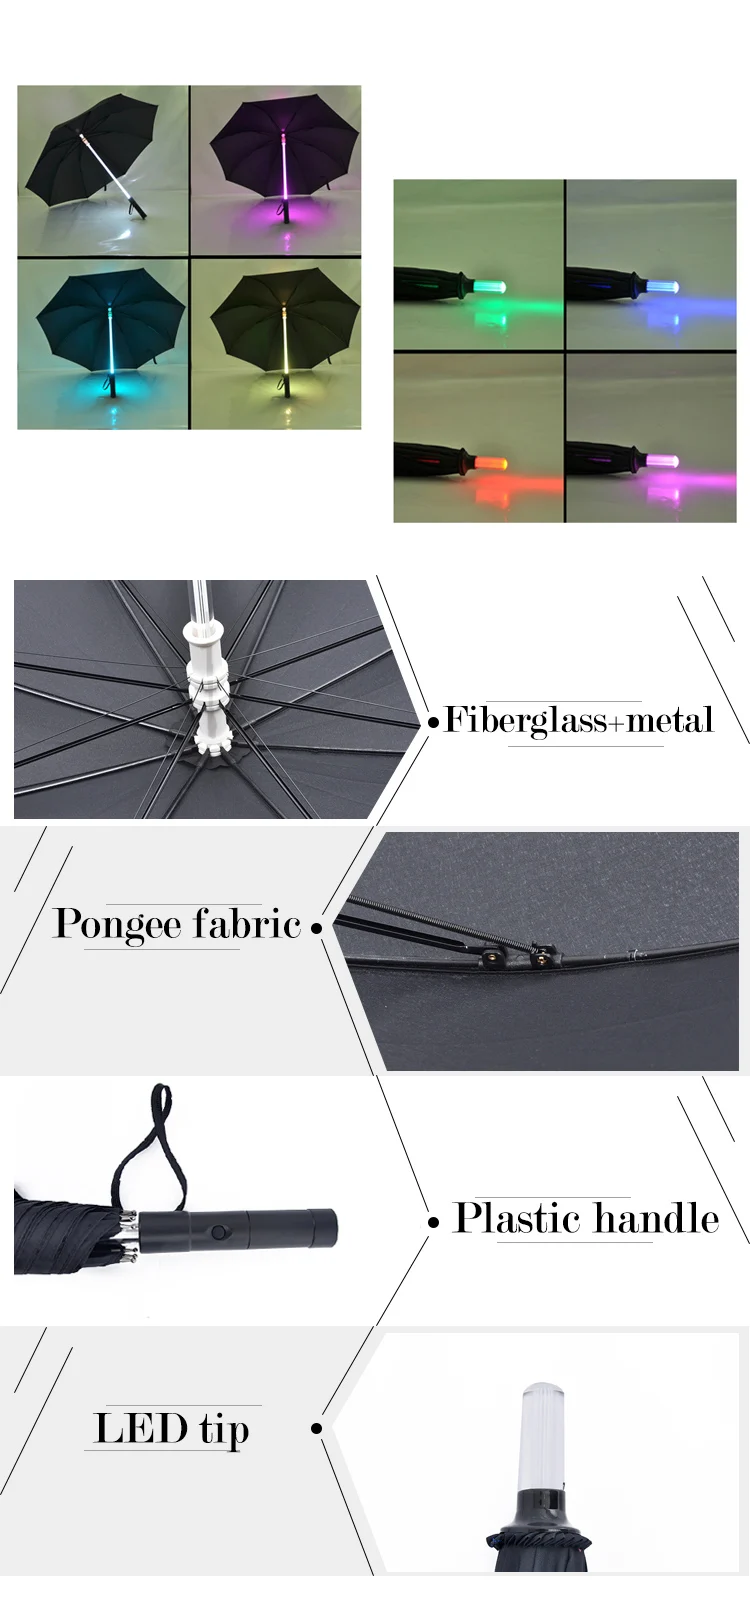 LU-01 new invention advertisement led light umbrella